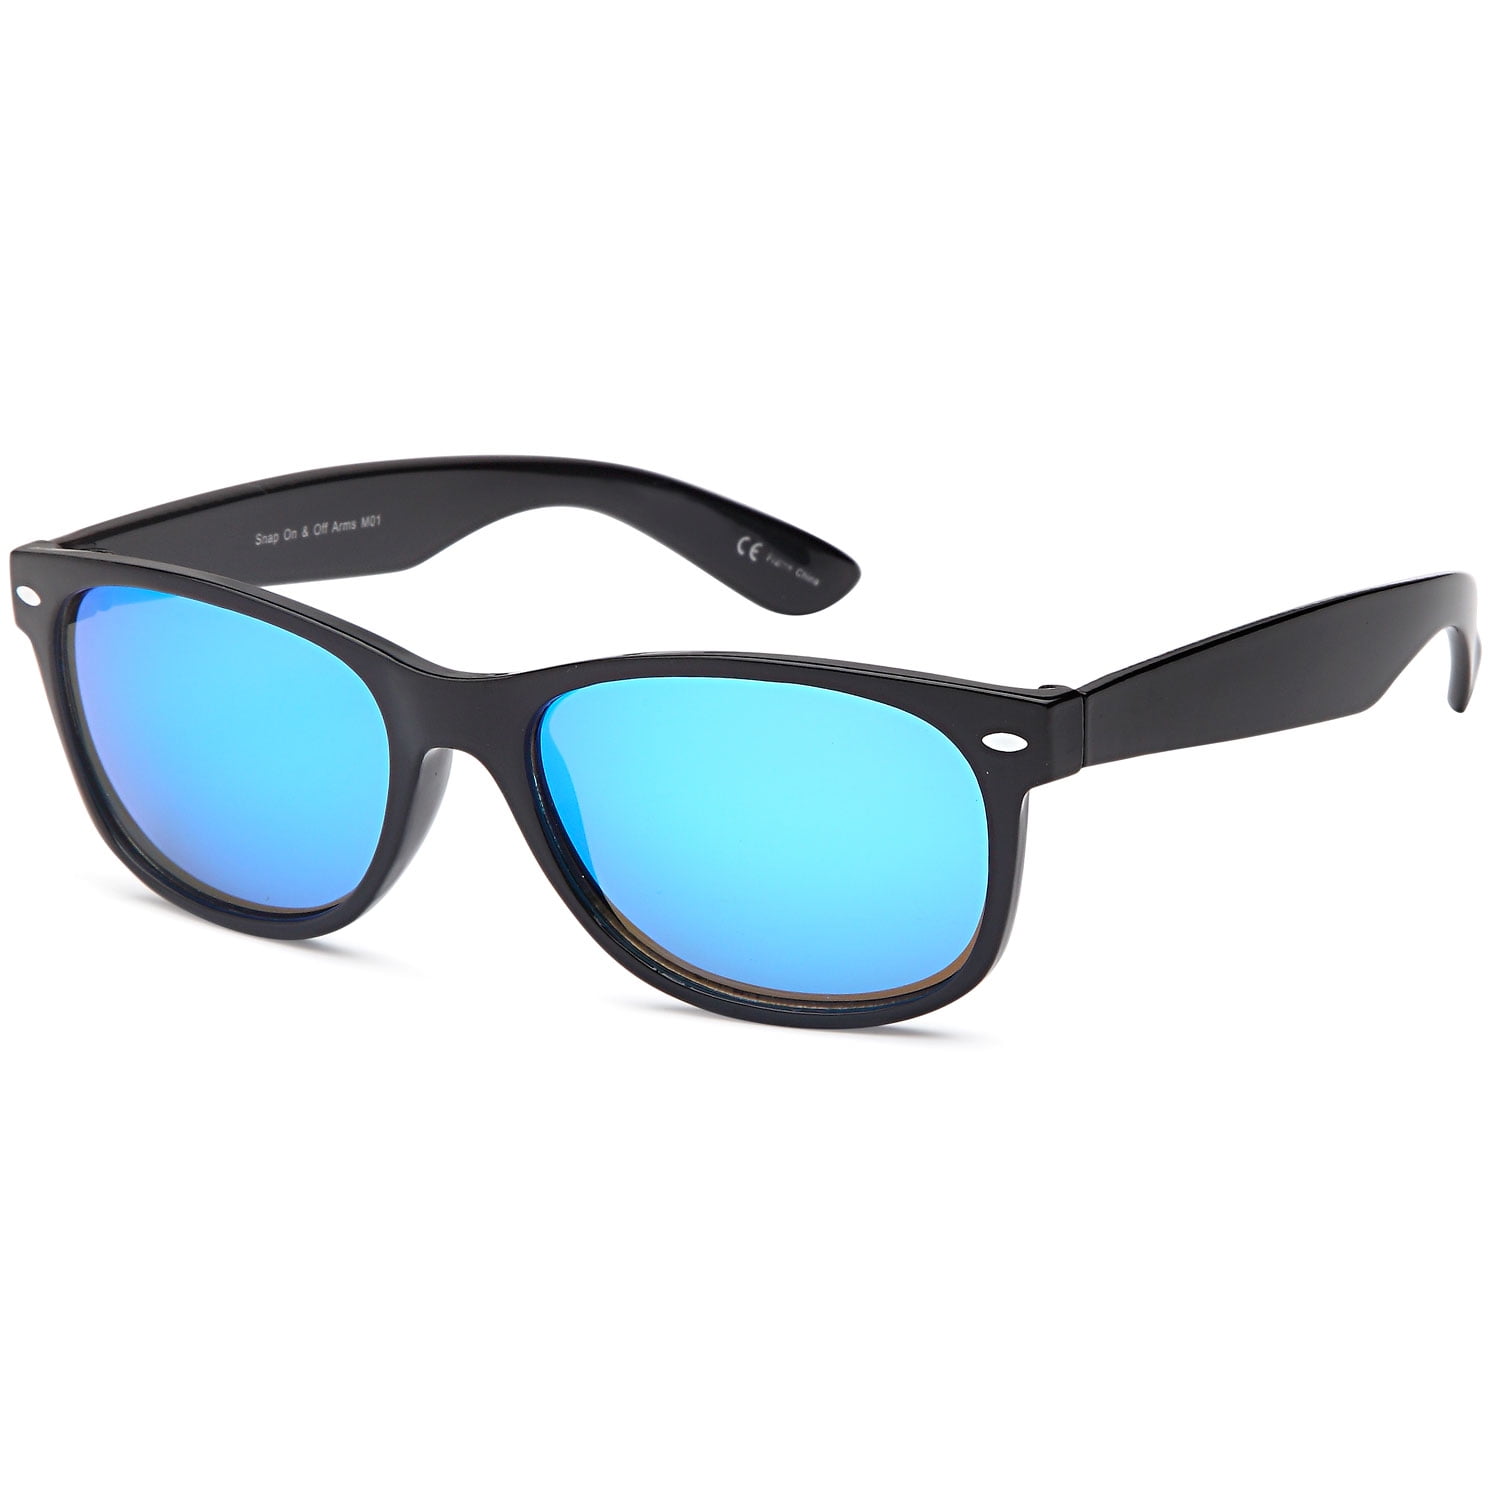 GAMMA RAY UV400 Classic Style Sunglasses - Mirror Blue Lens on Black ...